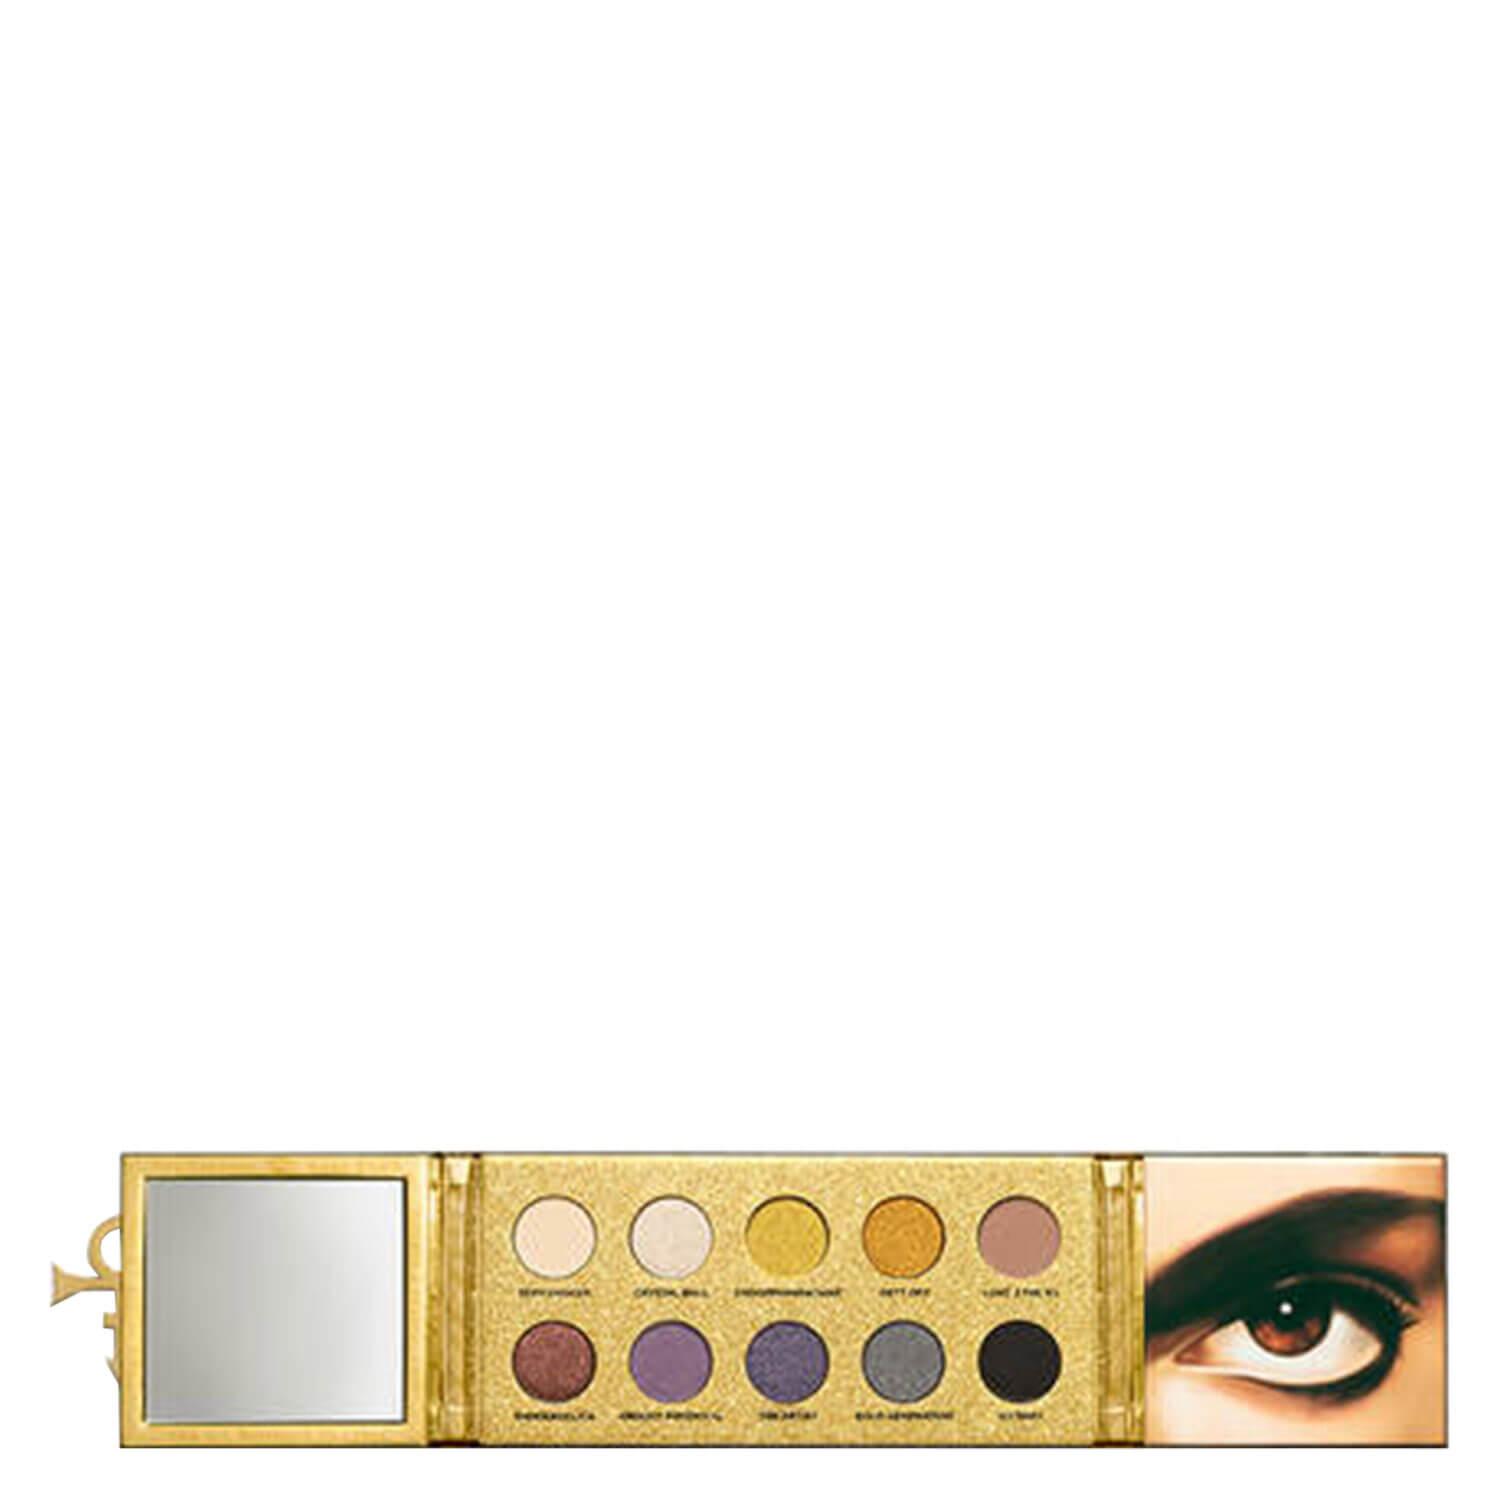 Naked Palettes - Prince U Got The Look Eyeshadow Palette